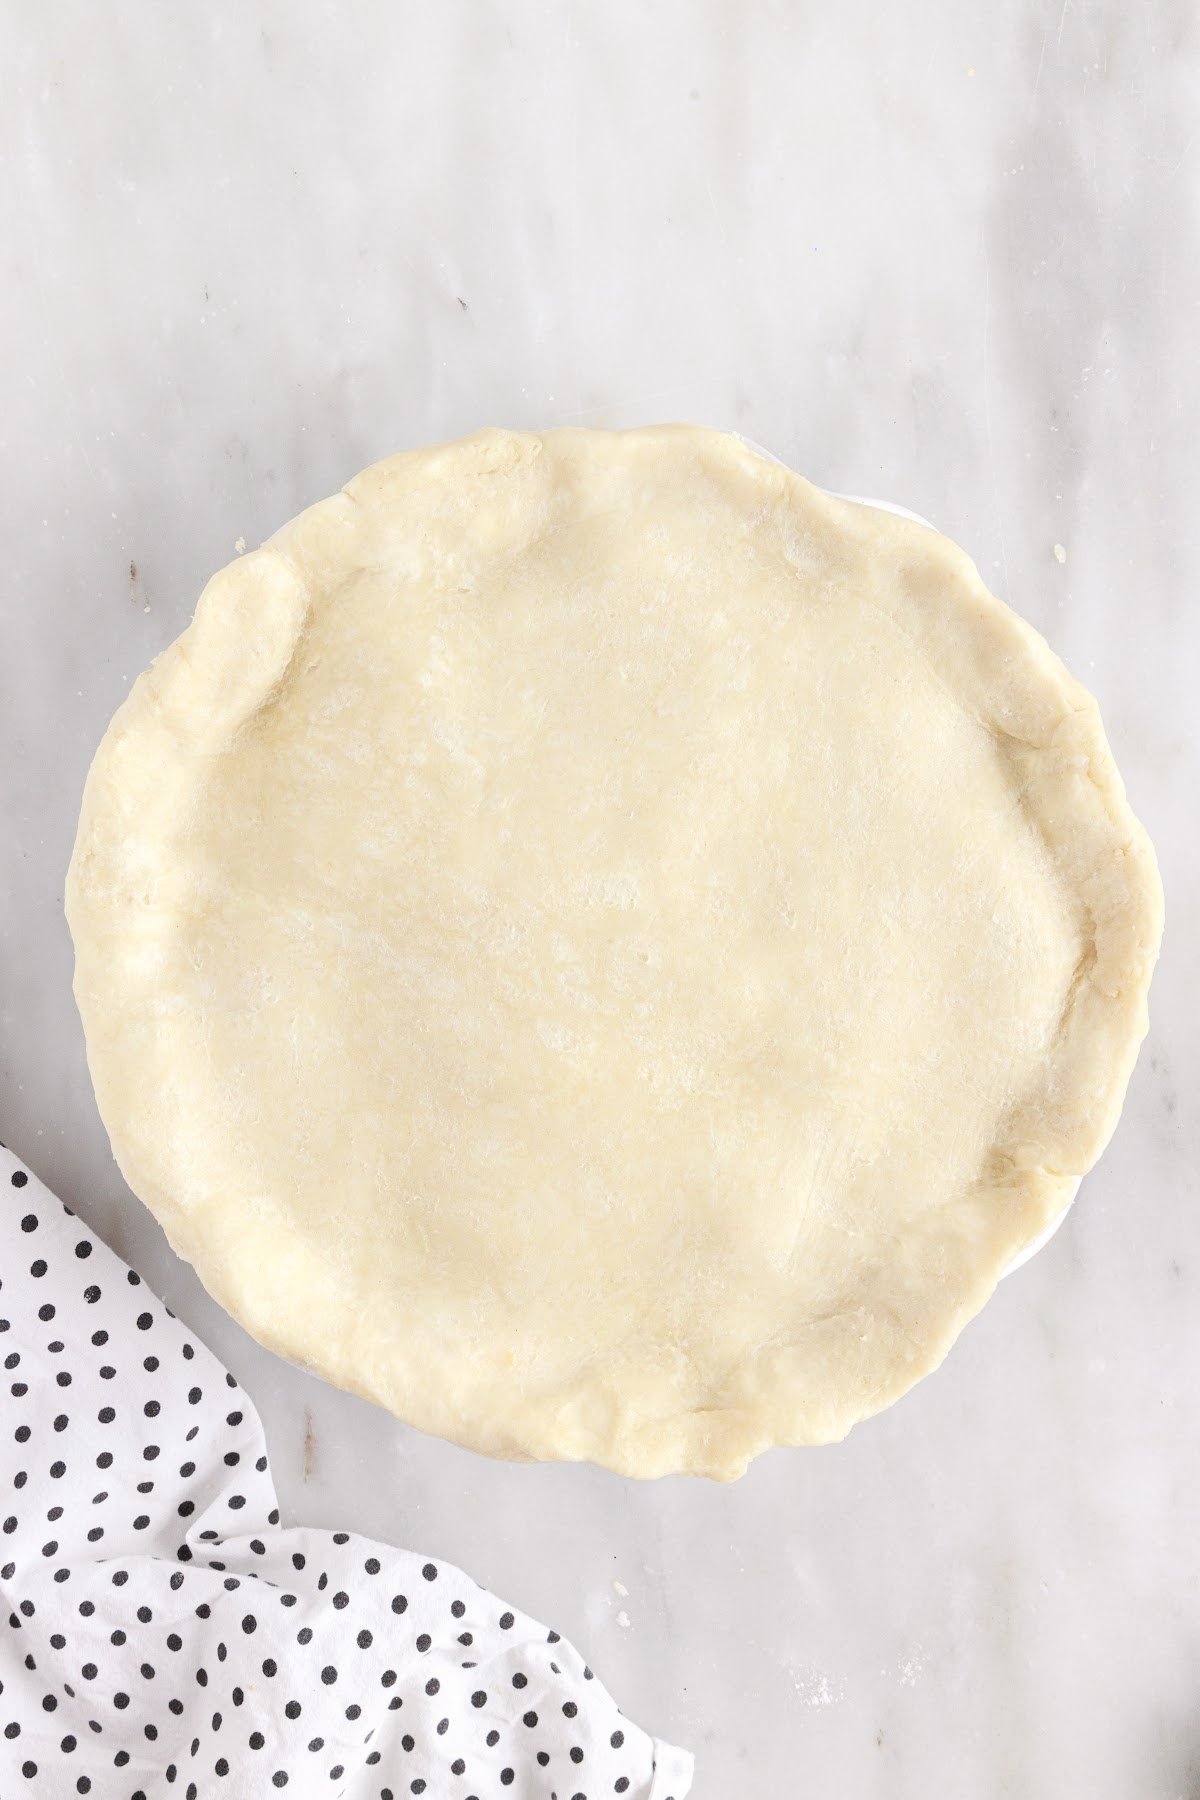 Pinch the top pie crust to the bottom pie crust.